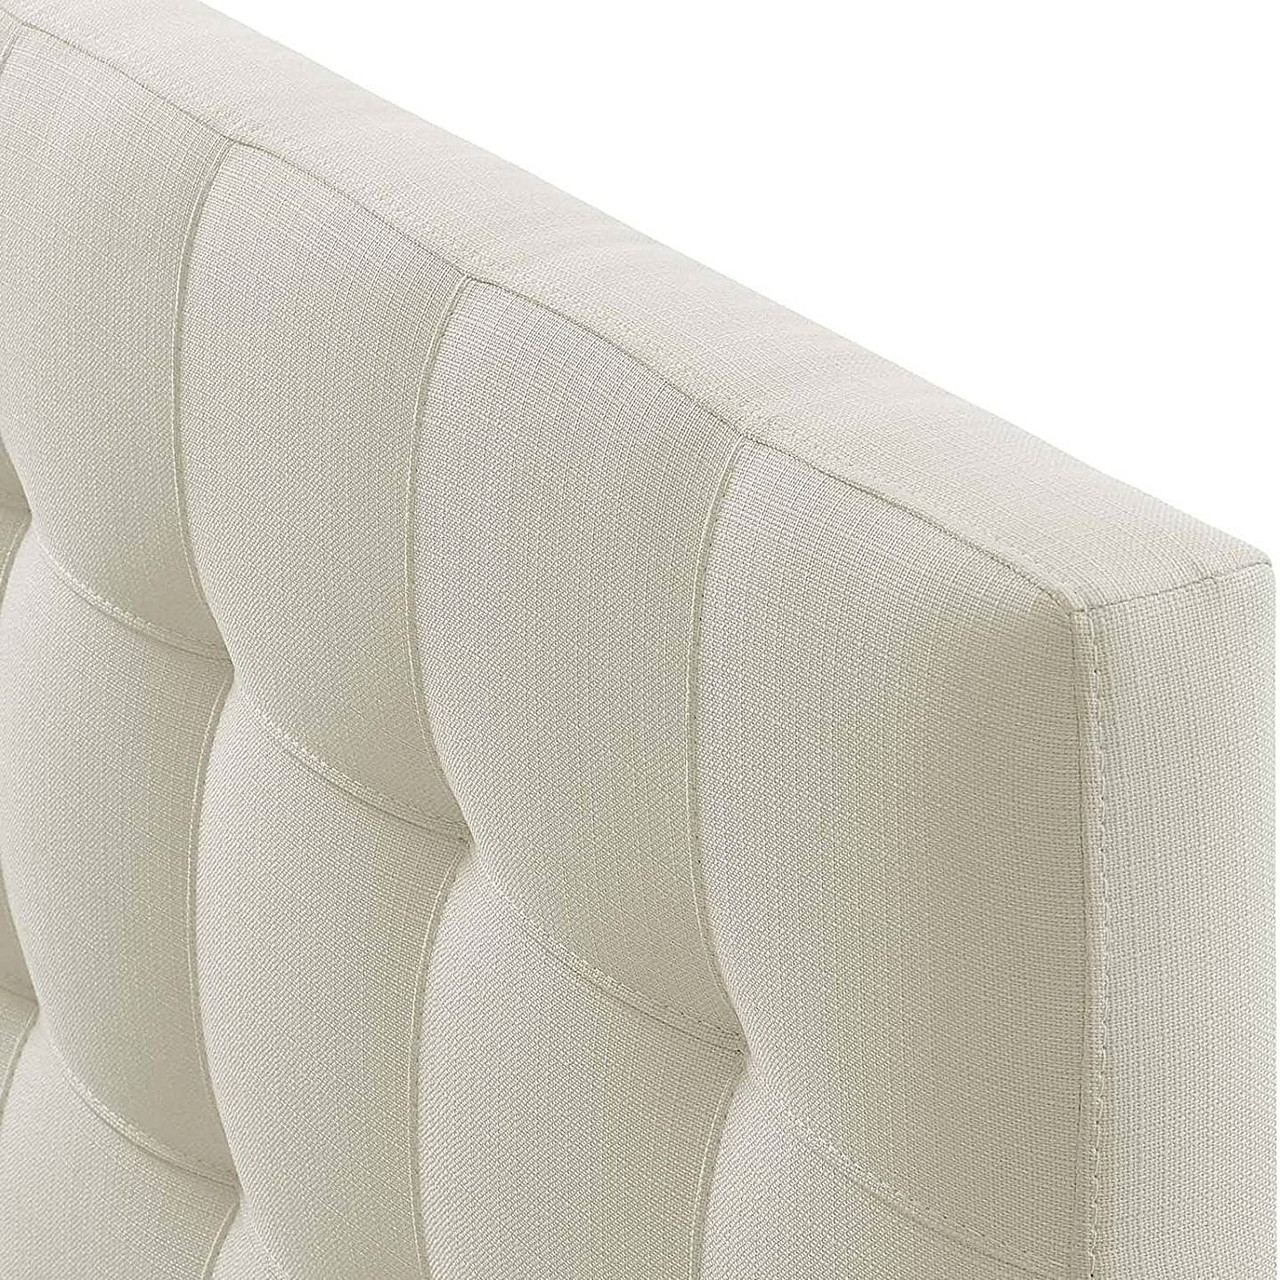 Full size Ivory Linen Fabric Upholstered Tufted Headboard